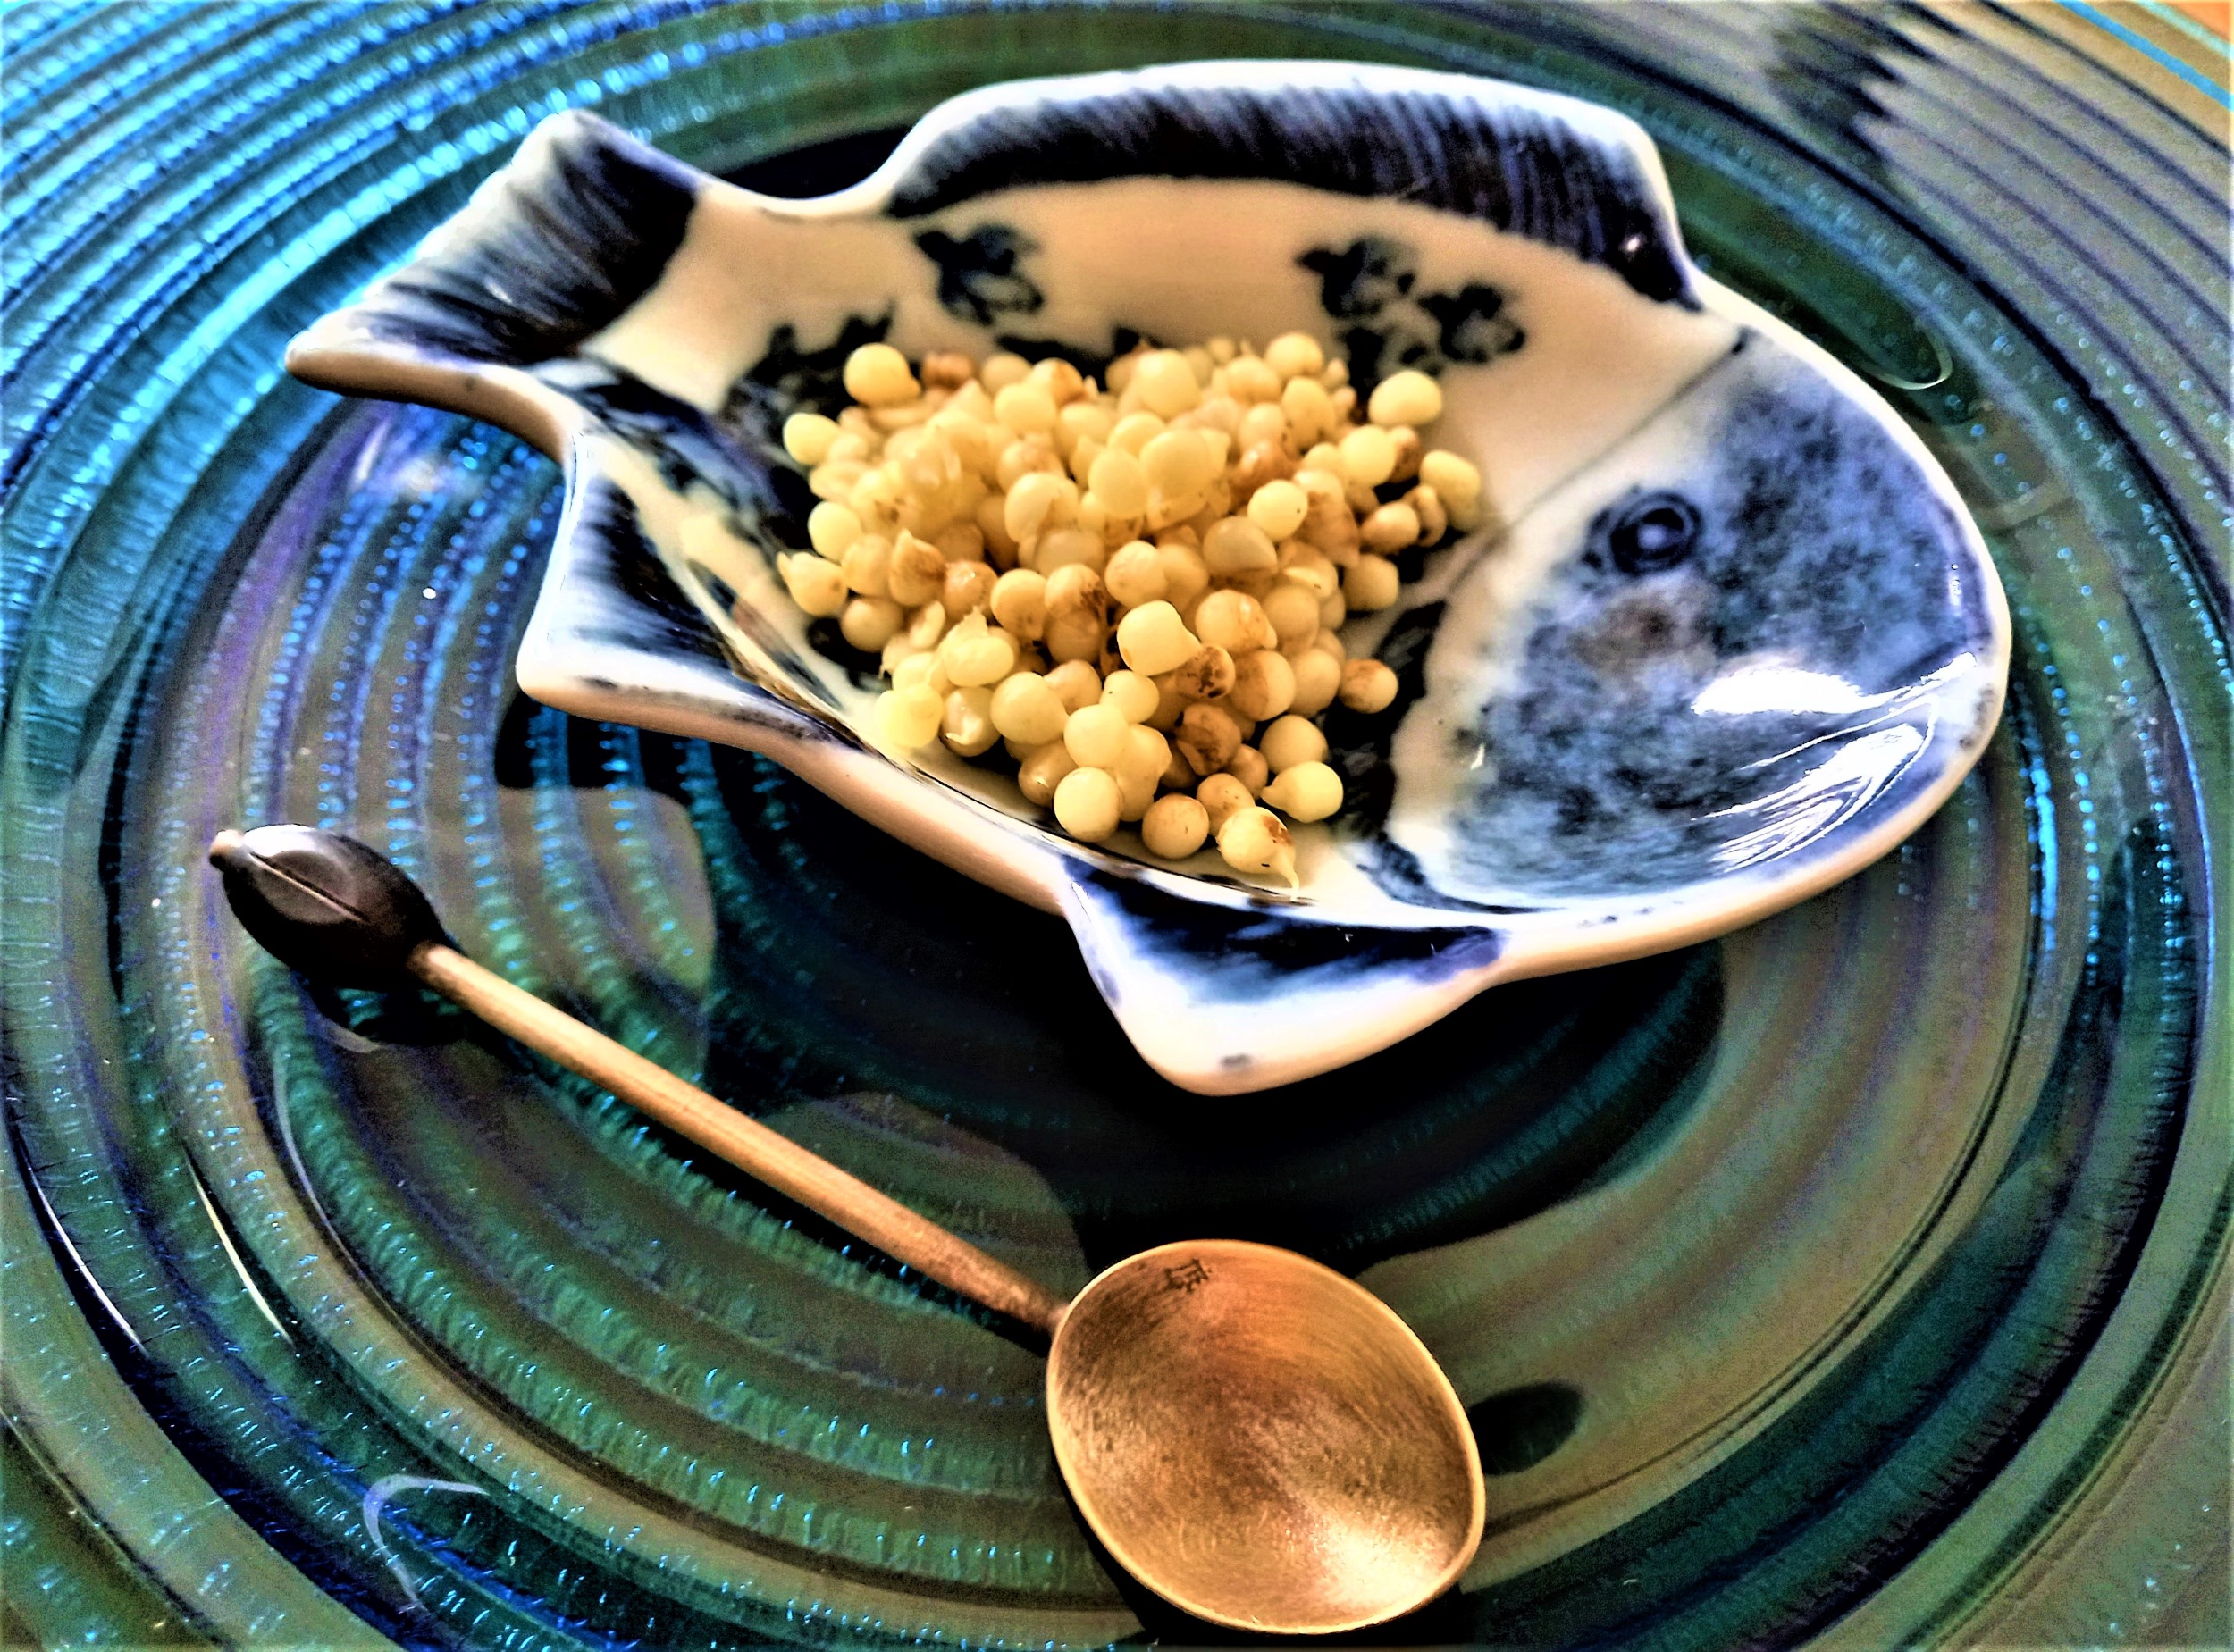 Caviar de quiabo, queijo de caju, acarajé japonês. A esquizofrenia gastronômica